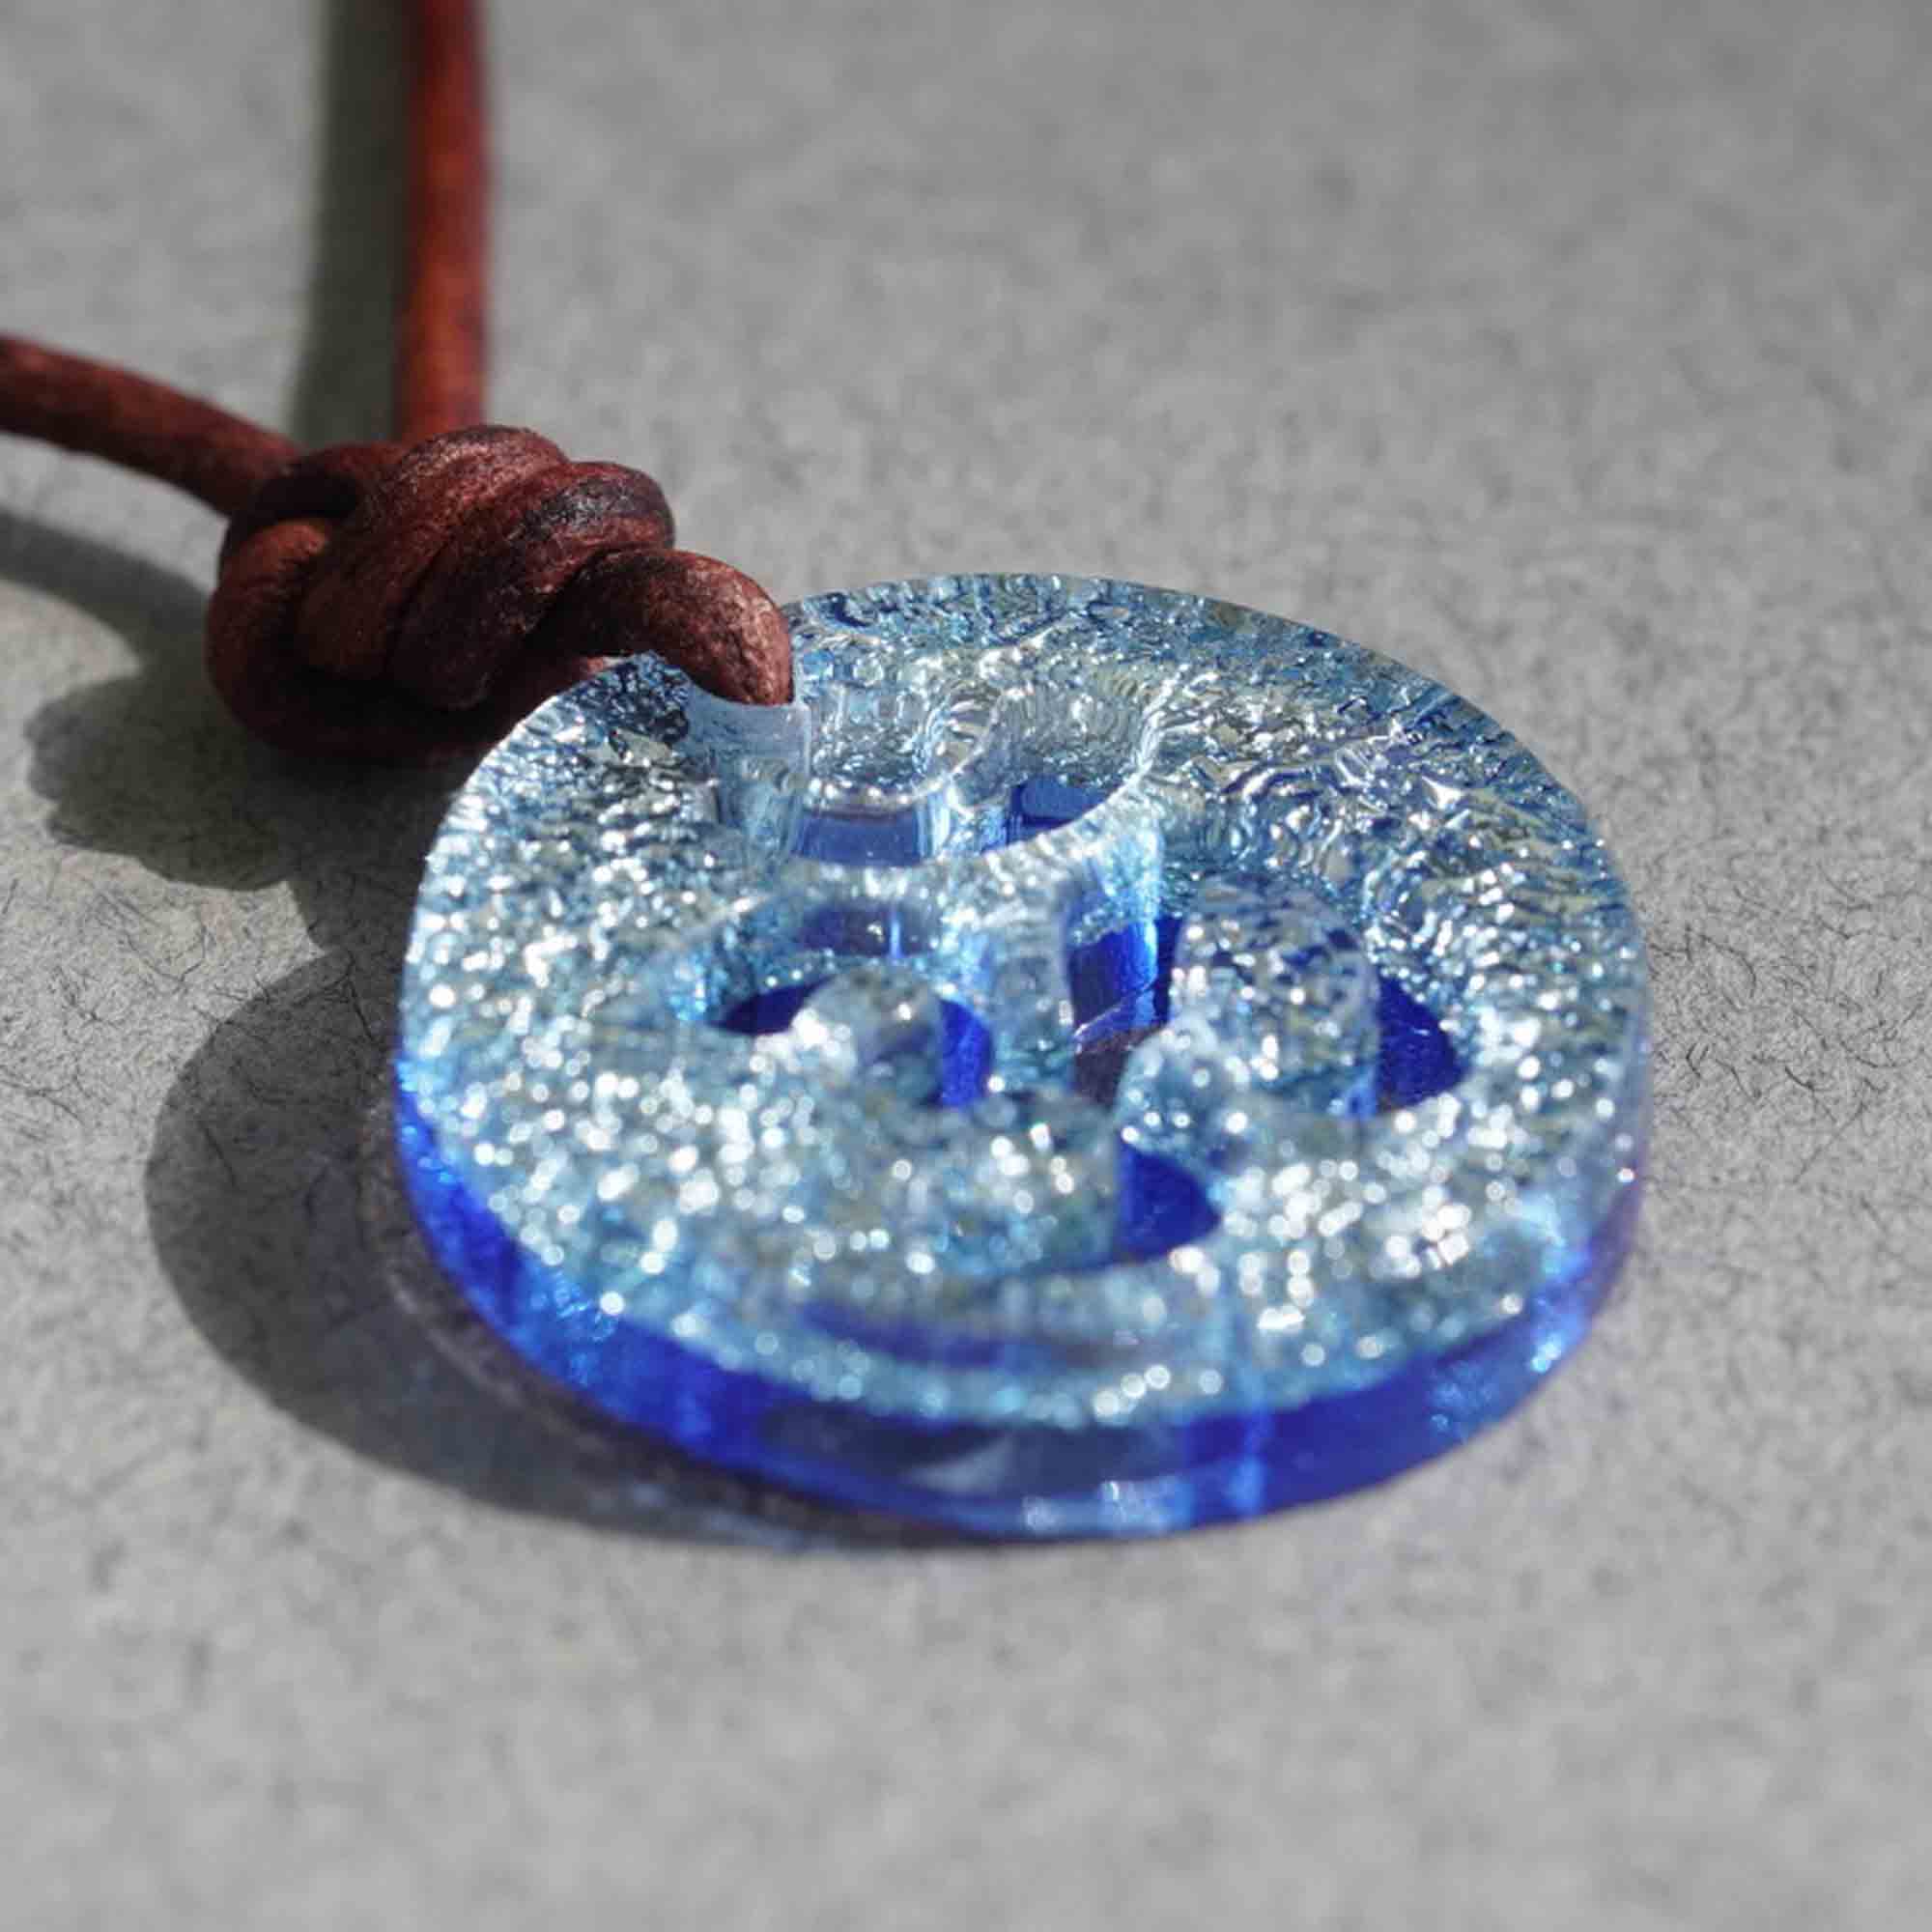 Om Yoga Necklace Spiritual Jewelry Glass Pendant - Zulasurfing Studios